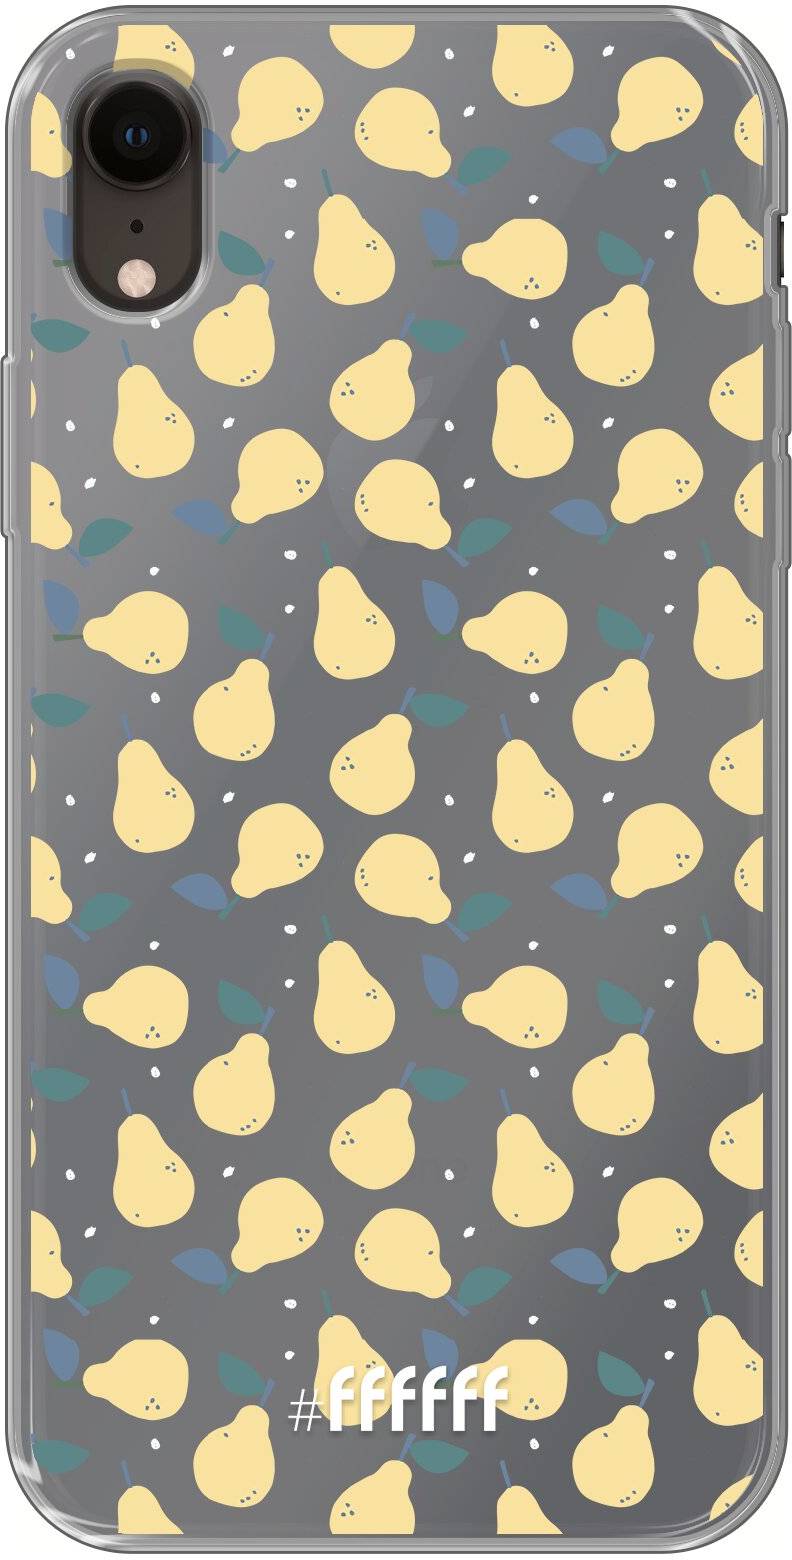 Pears iPhone Xr